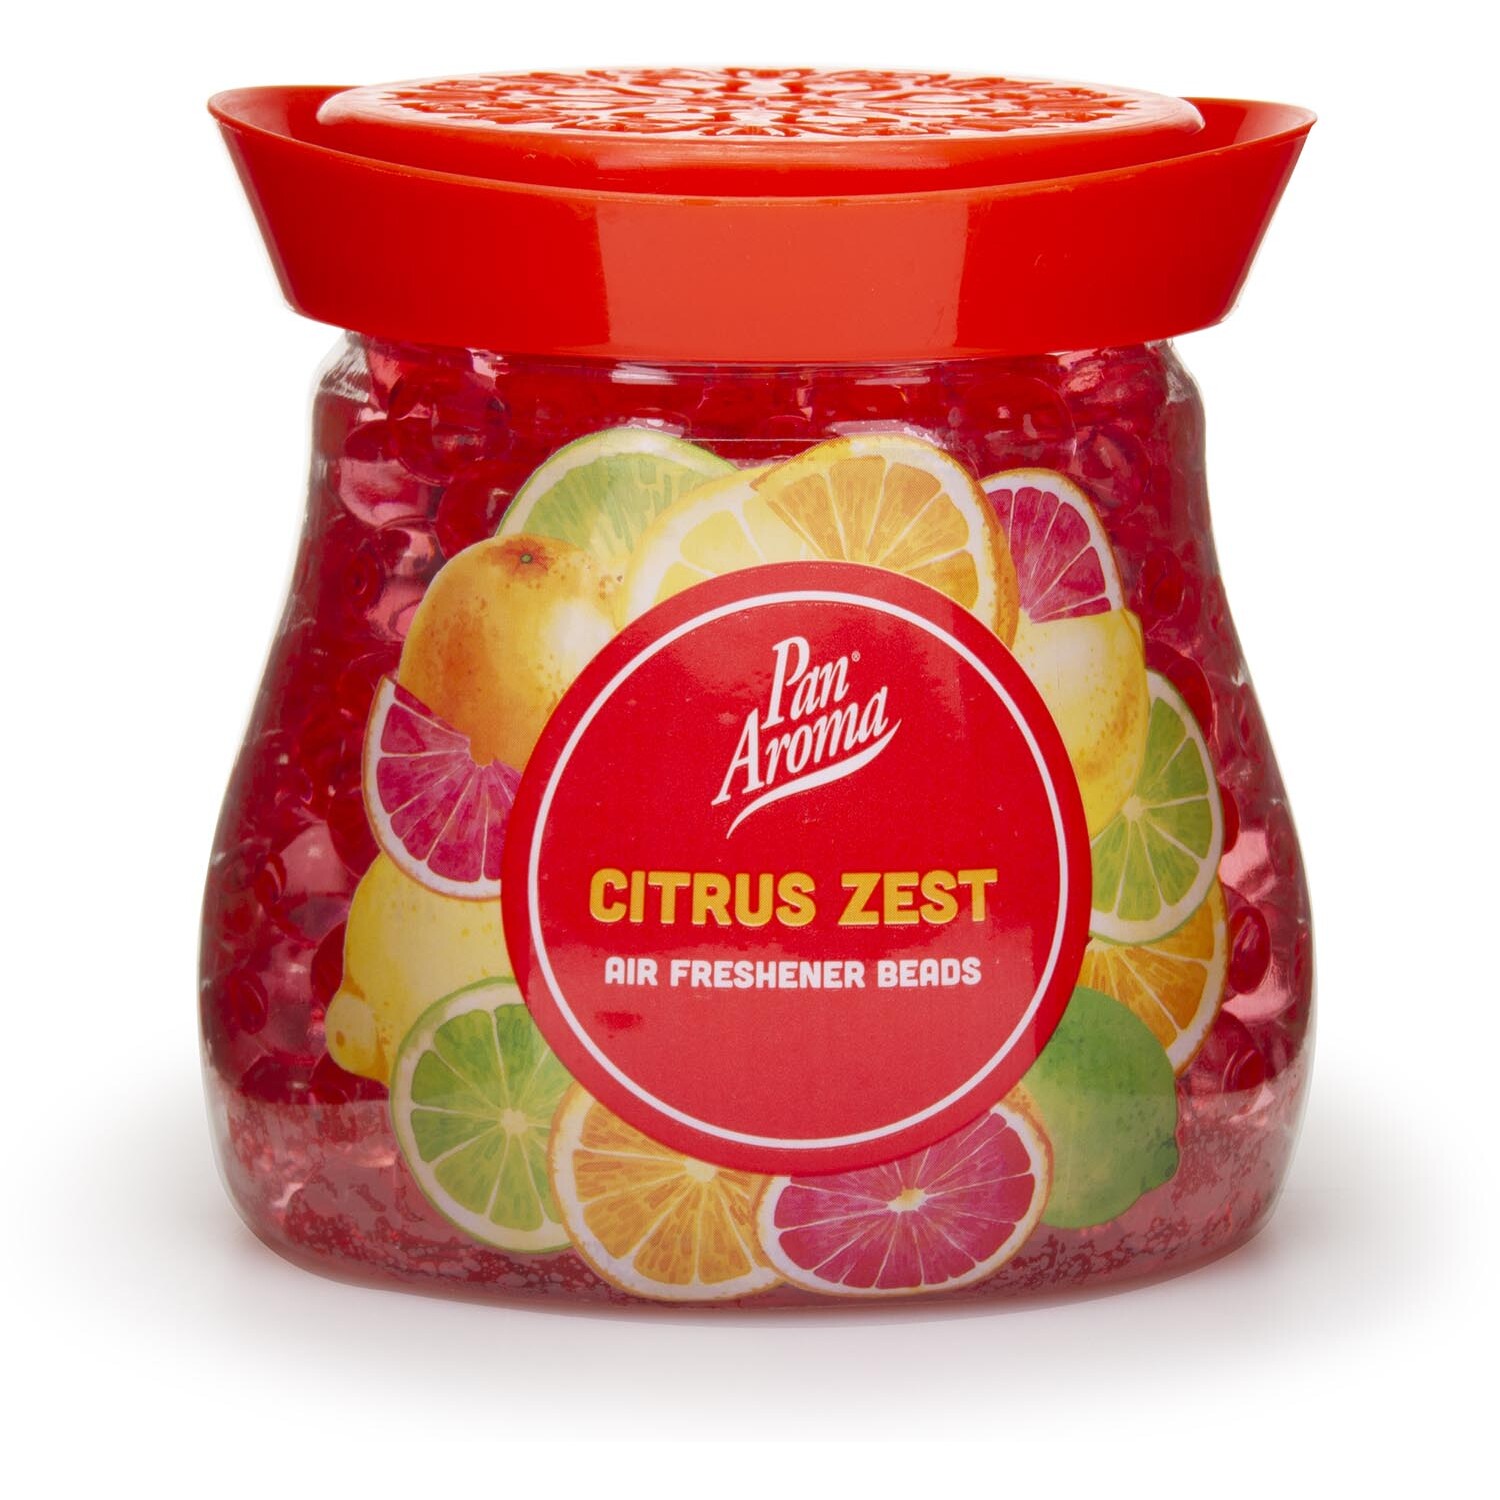 Pan Aroma Air Freshener Beads - Citrus Zest Image